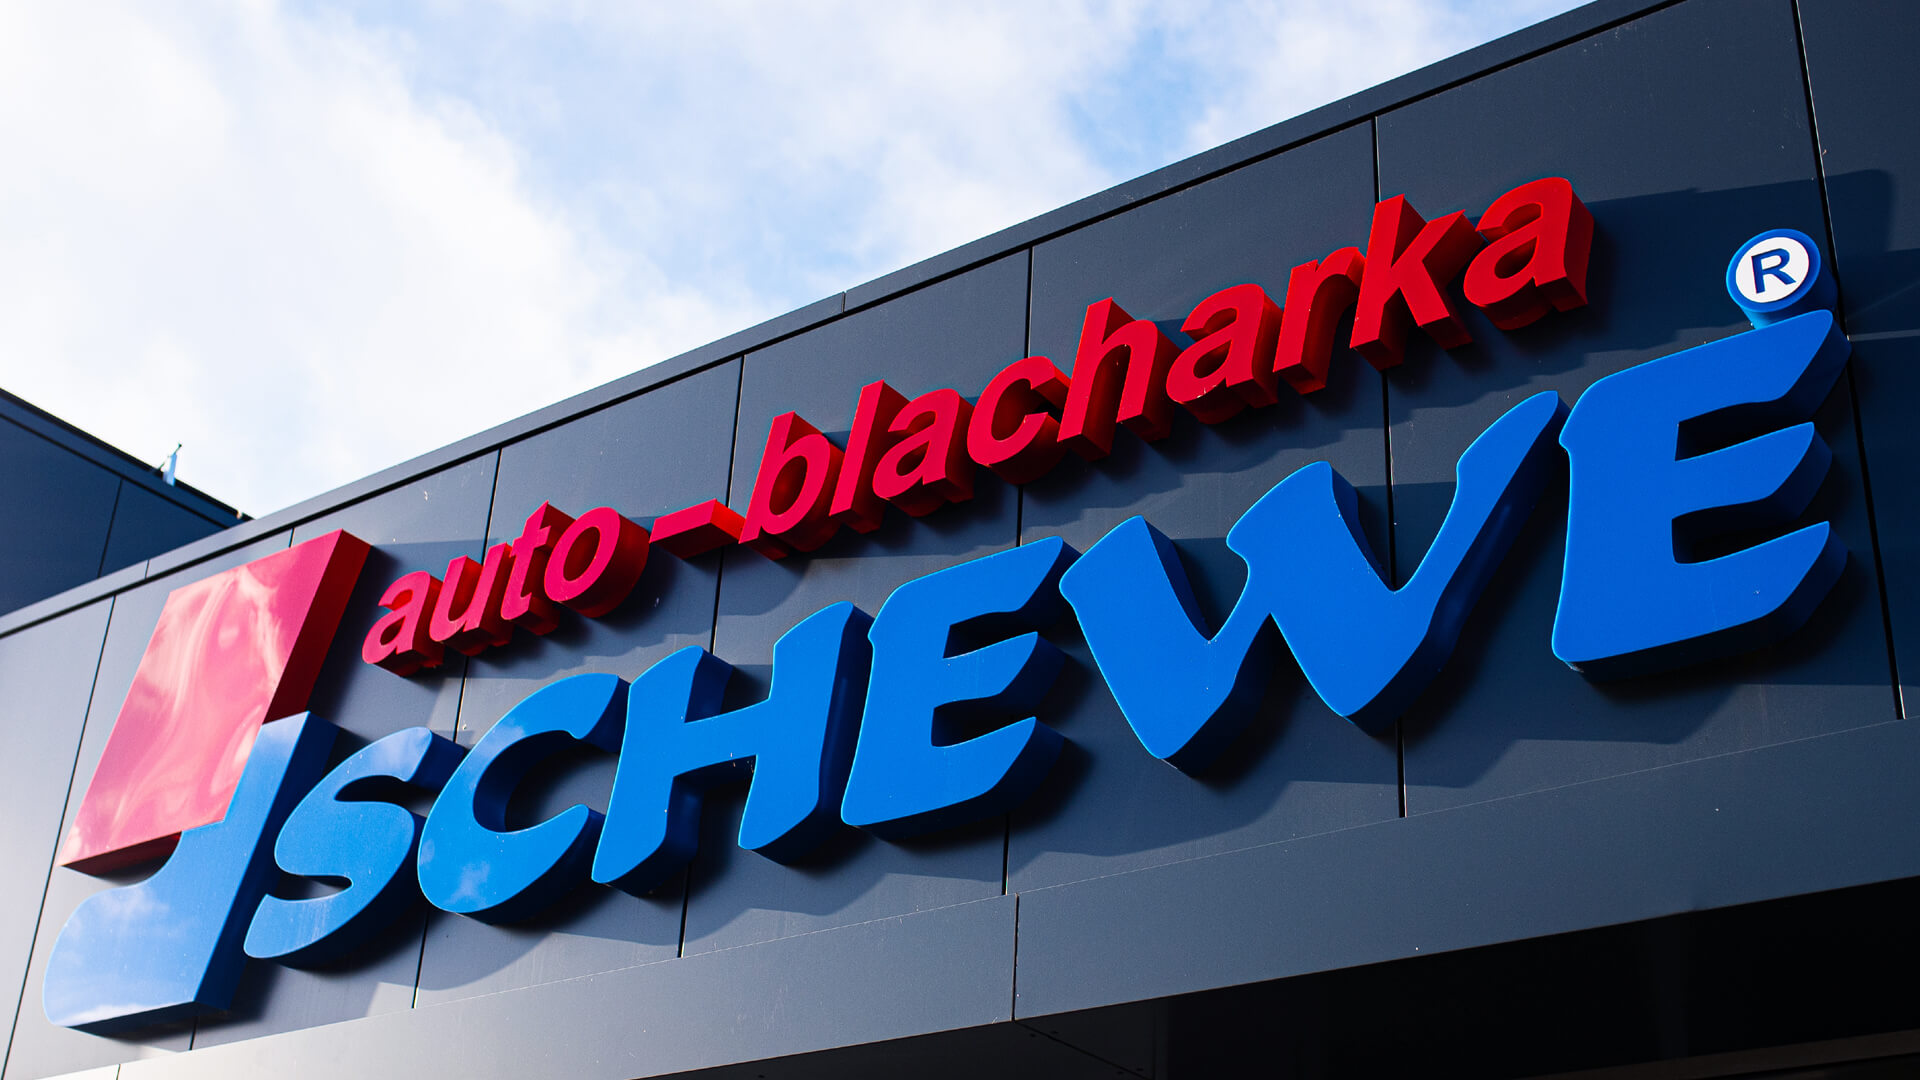 Auto blacharka Schewe - Large 3D letters, LED backlit, made of Plexiglas.